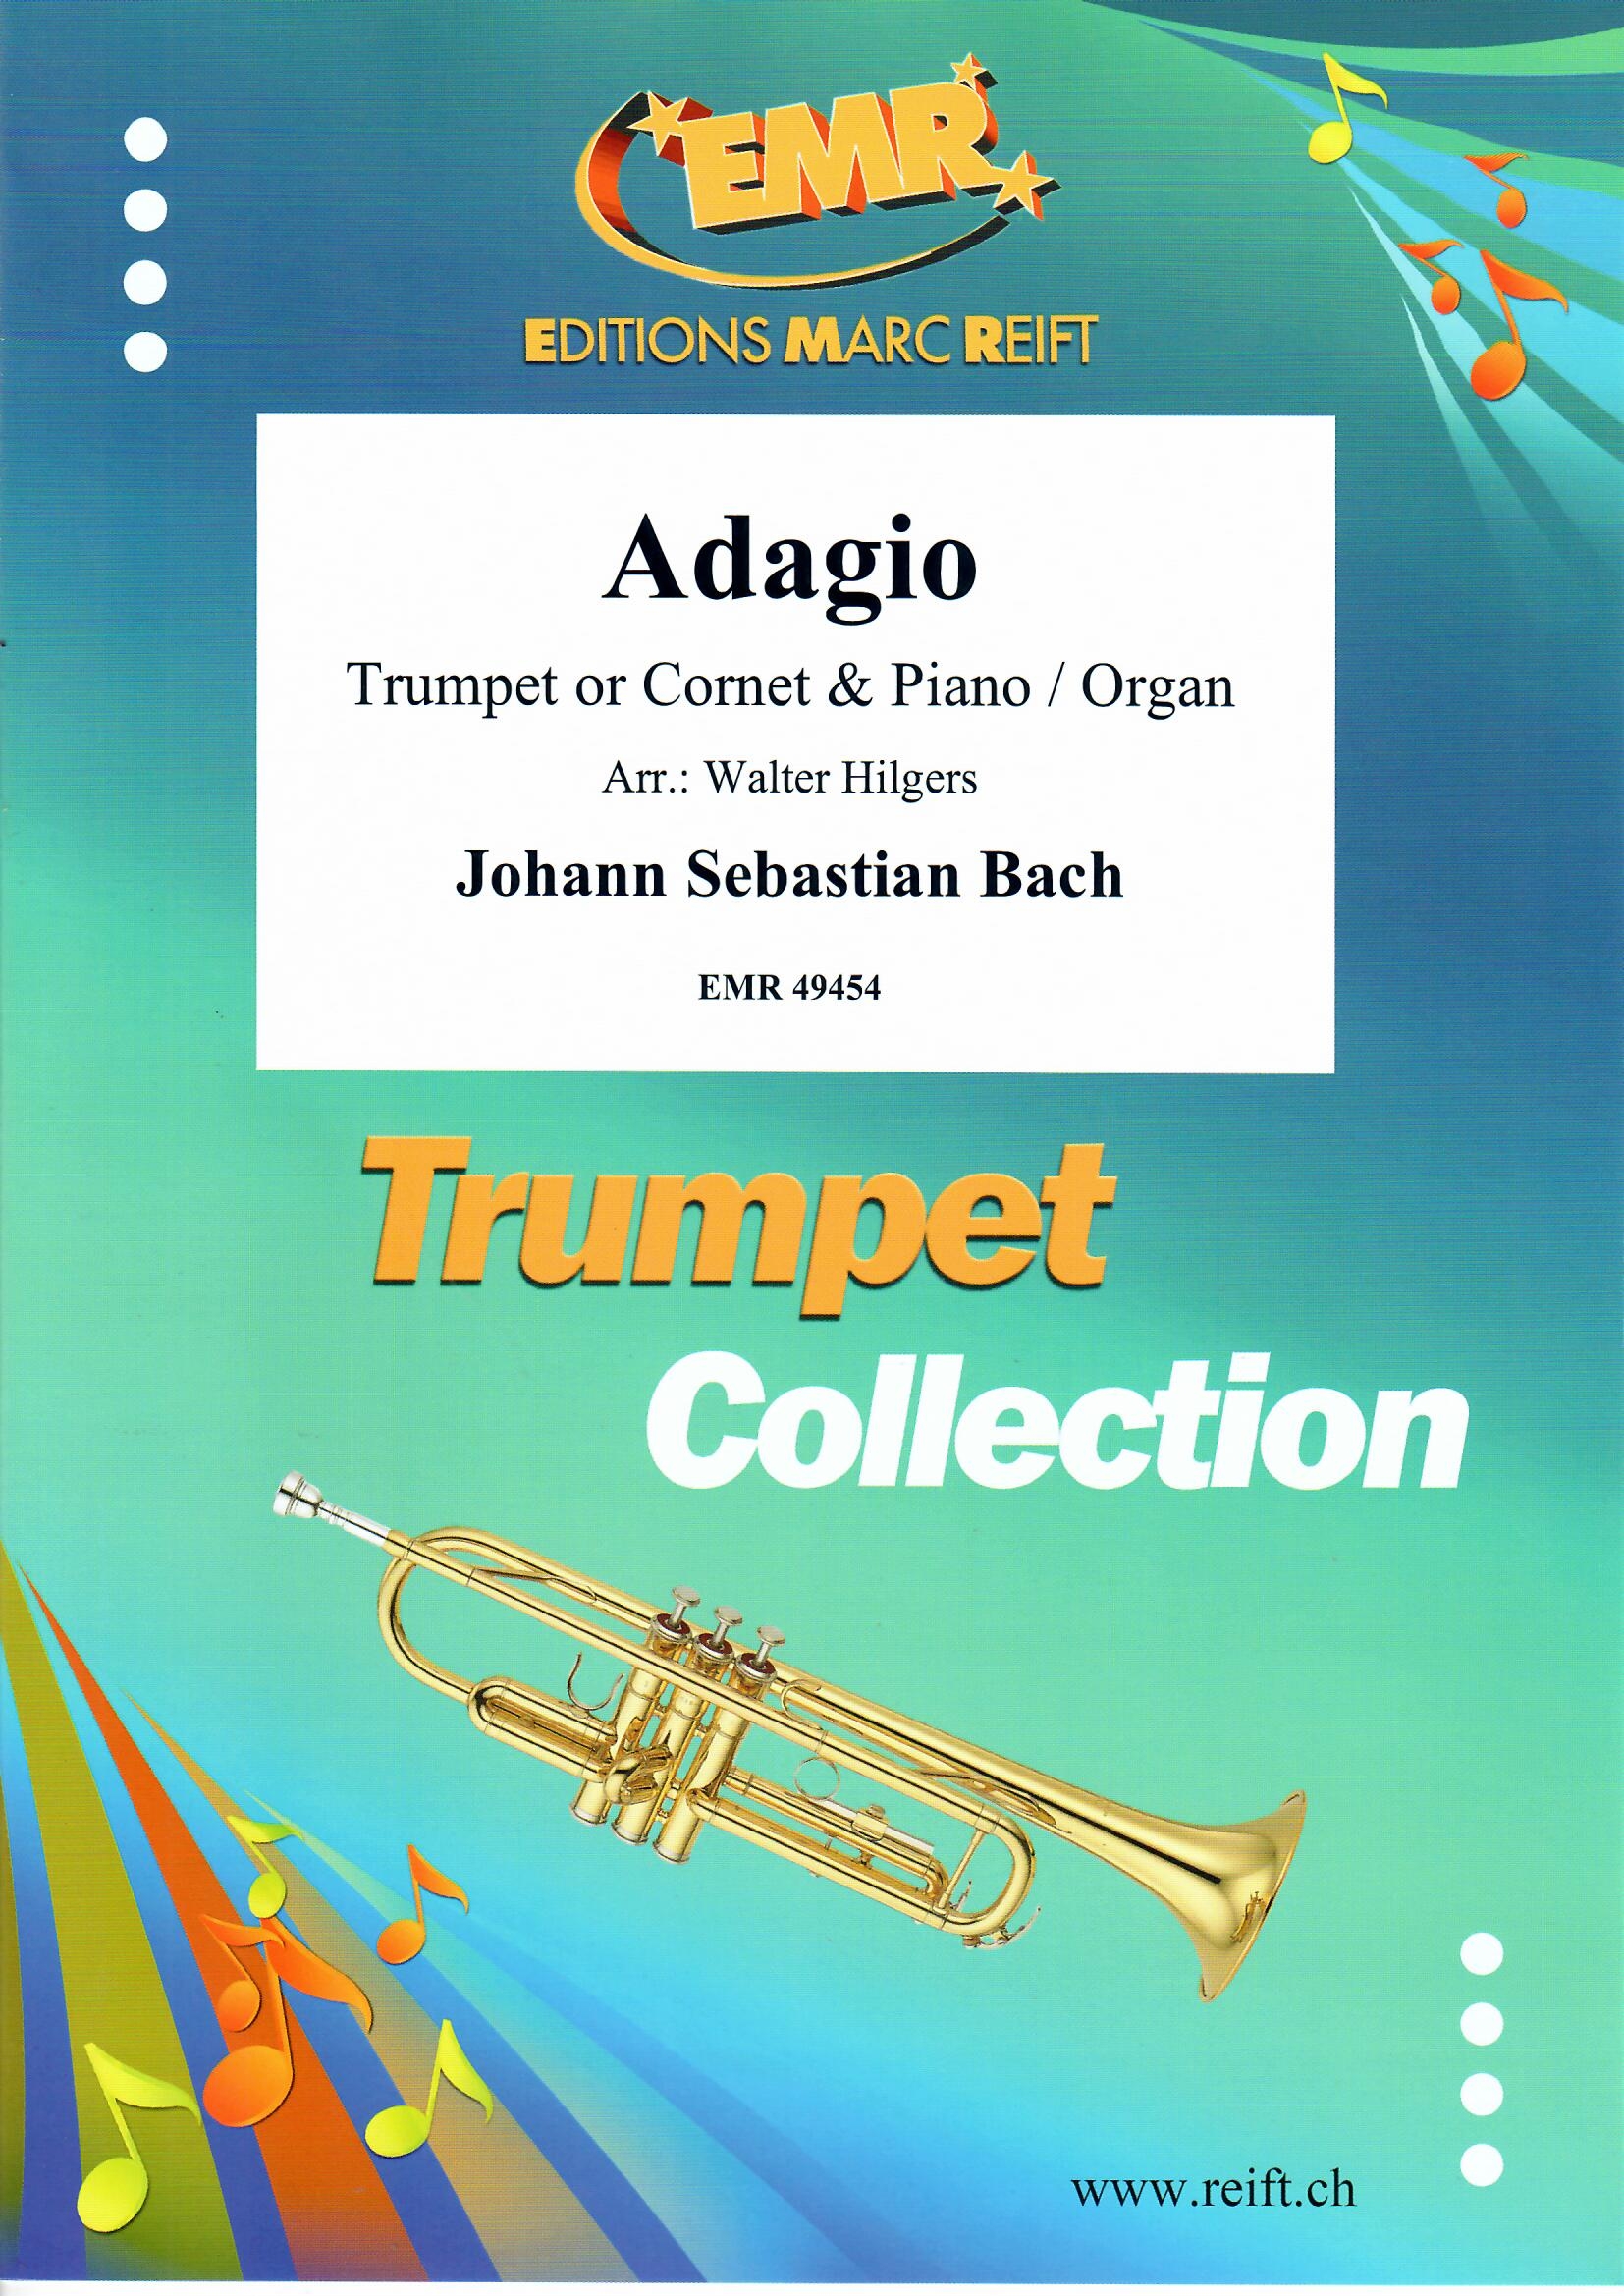 ADAGIO - Trumpet & Organ, SOLOS - B♭. Cornet/Trumpet with Piano